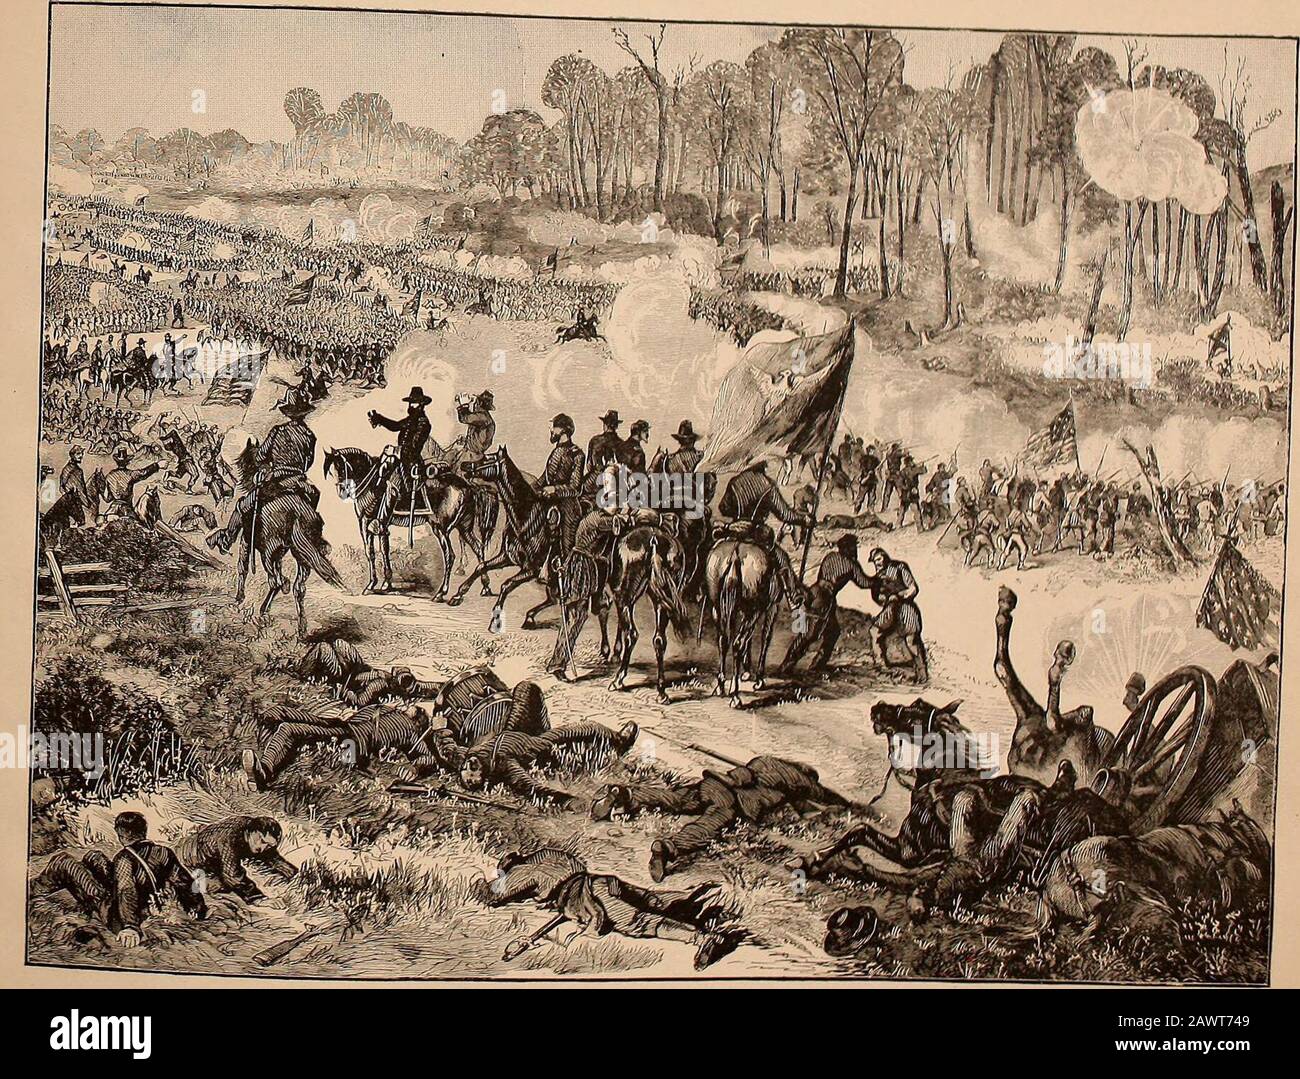 Bilderbuch der Grand Army vom 12. April 1861 bis zum 26. April 1865. JAMFS., OARKUXD... DATTI.E VON CHICKAJIAUf;., GEOfWIA. V0U(;IIT SKPTEMUKIt iU-J), WHS. Stockfoto